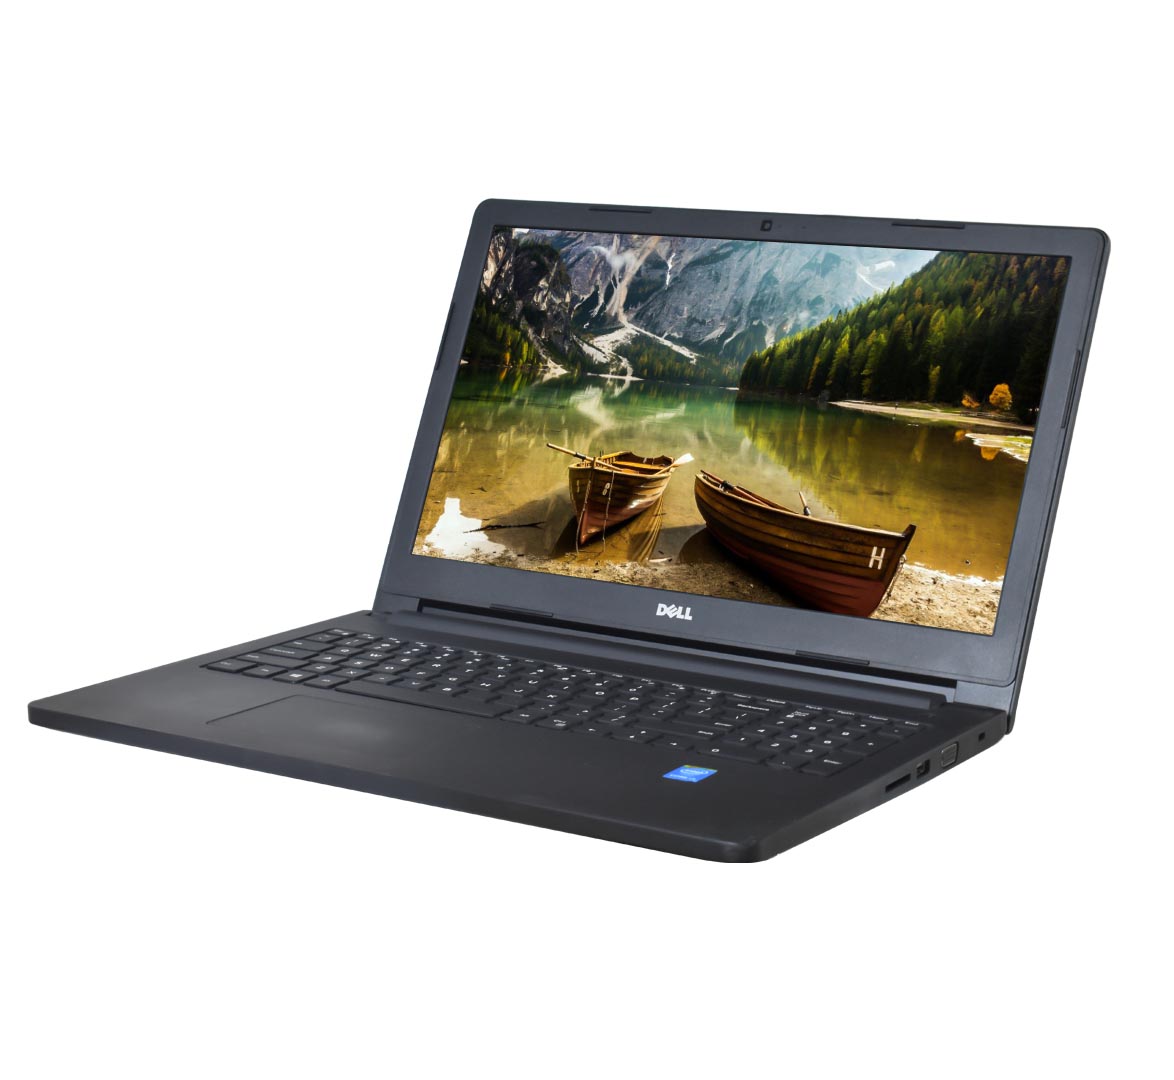 Dell Latitude 3560 Business Laptop, Intel Core i3-5th Generation CPU, 4GB RAM, 500GB HDD, 15.6 inch Display, Windows 10 Pro, Refurbished Laptop